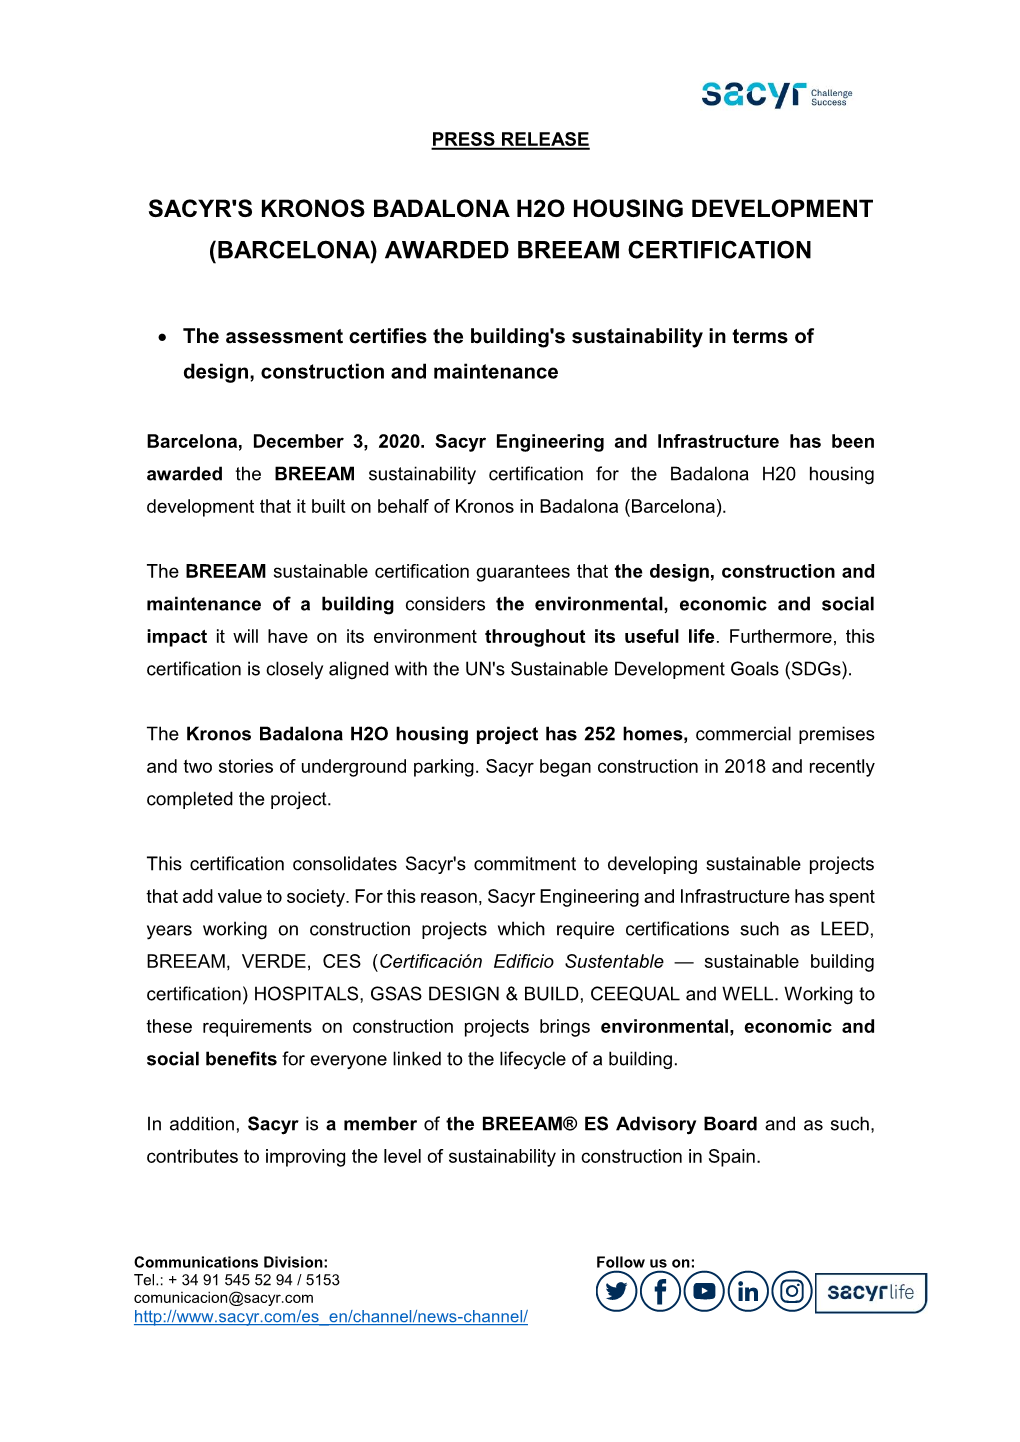 Sacyr's Kronos Badalona H2o Housing Development (Barcelona) Awarded Breeam Certification